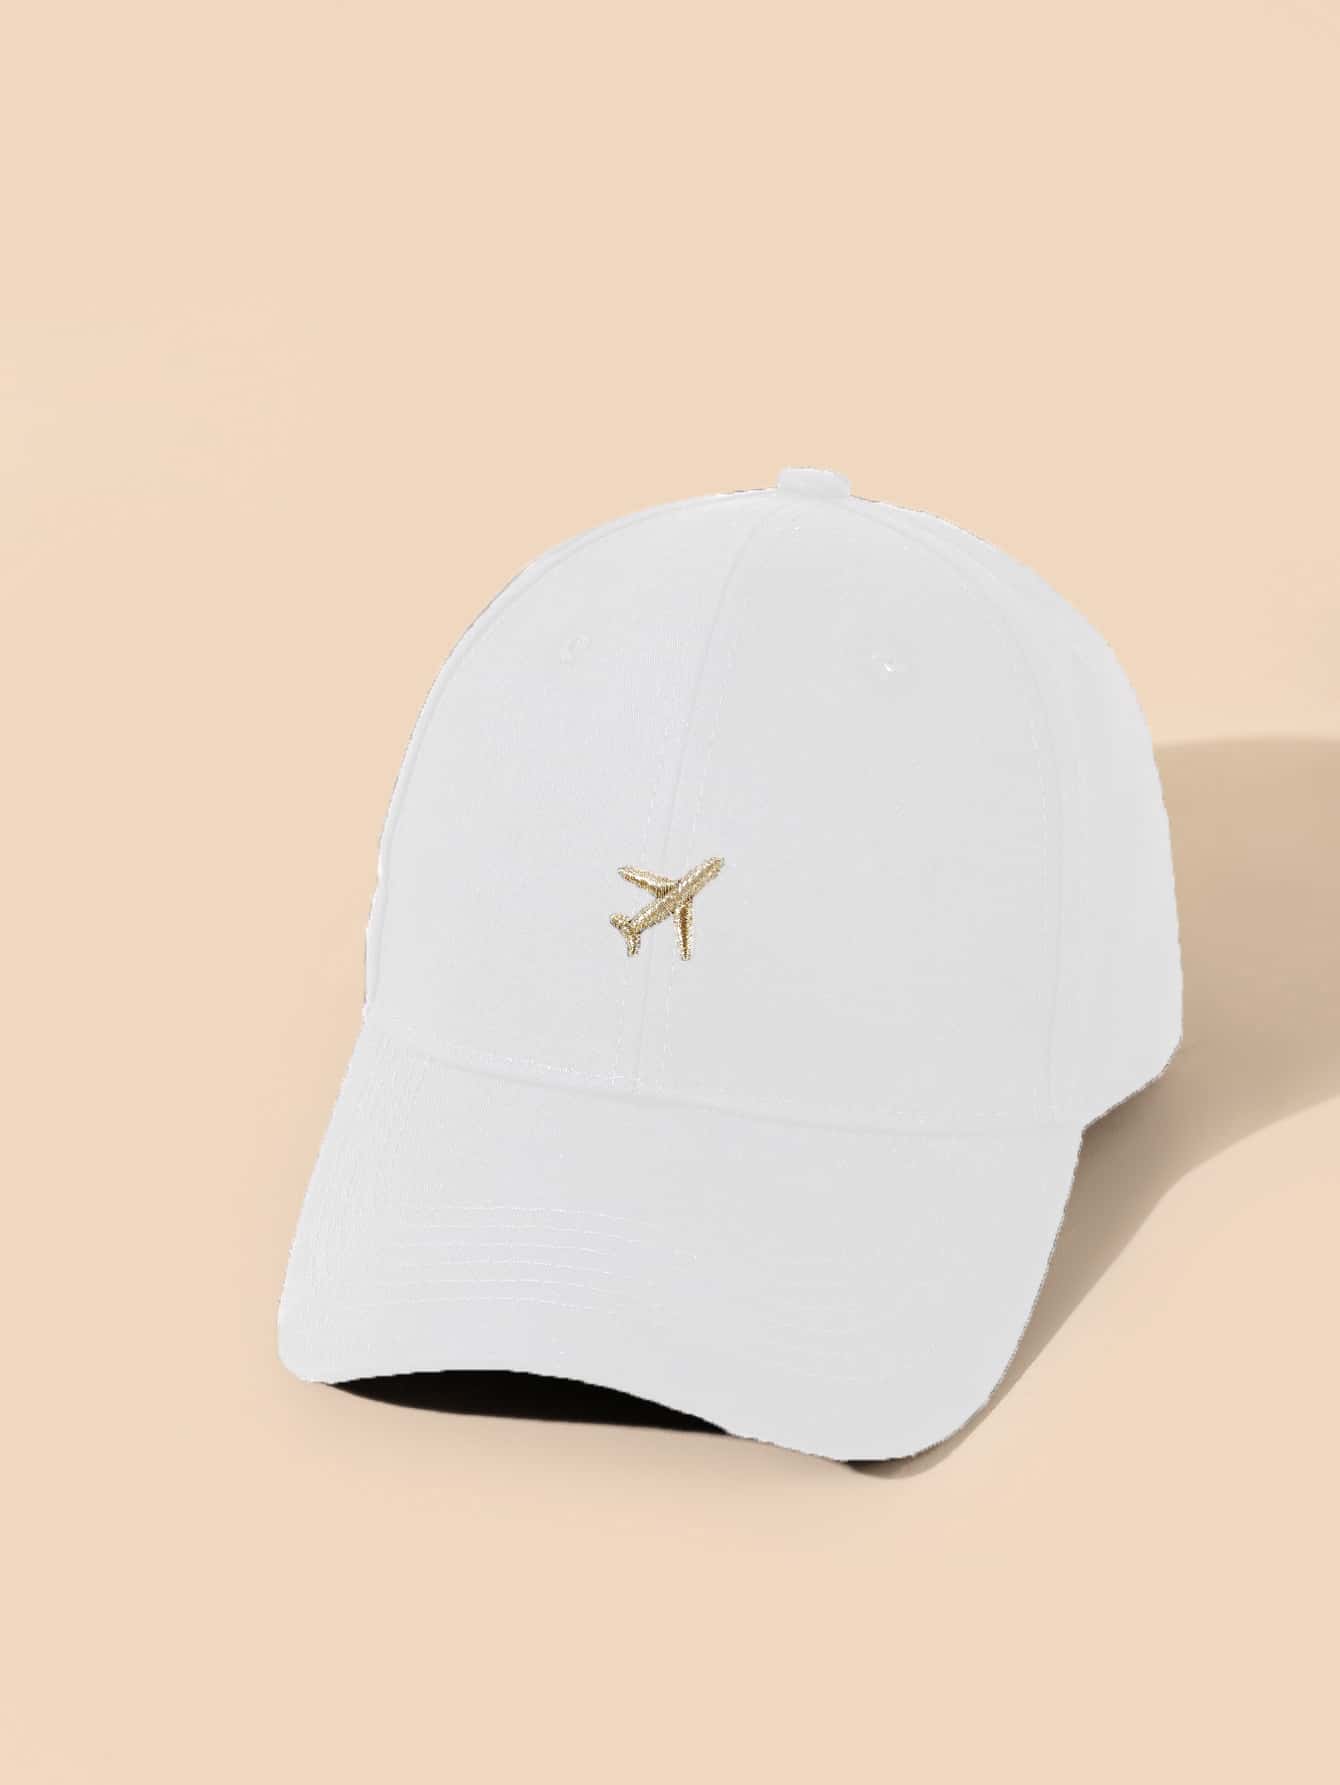 Airplane Embroidery Baseball Cap - White - FD ⚡